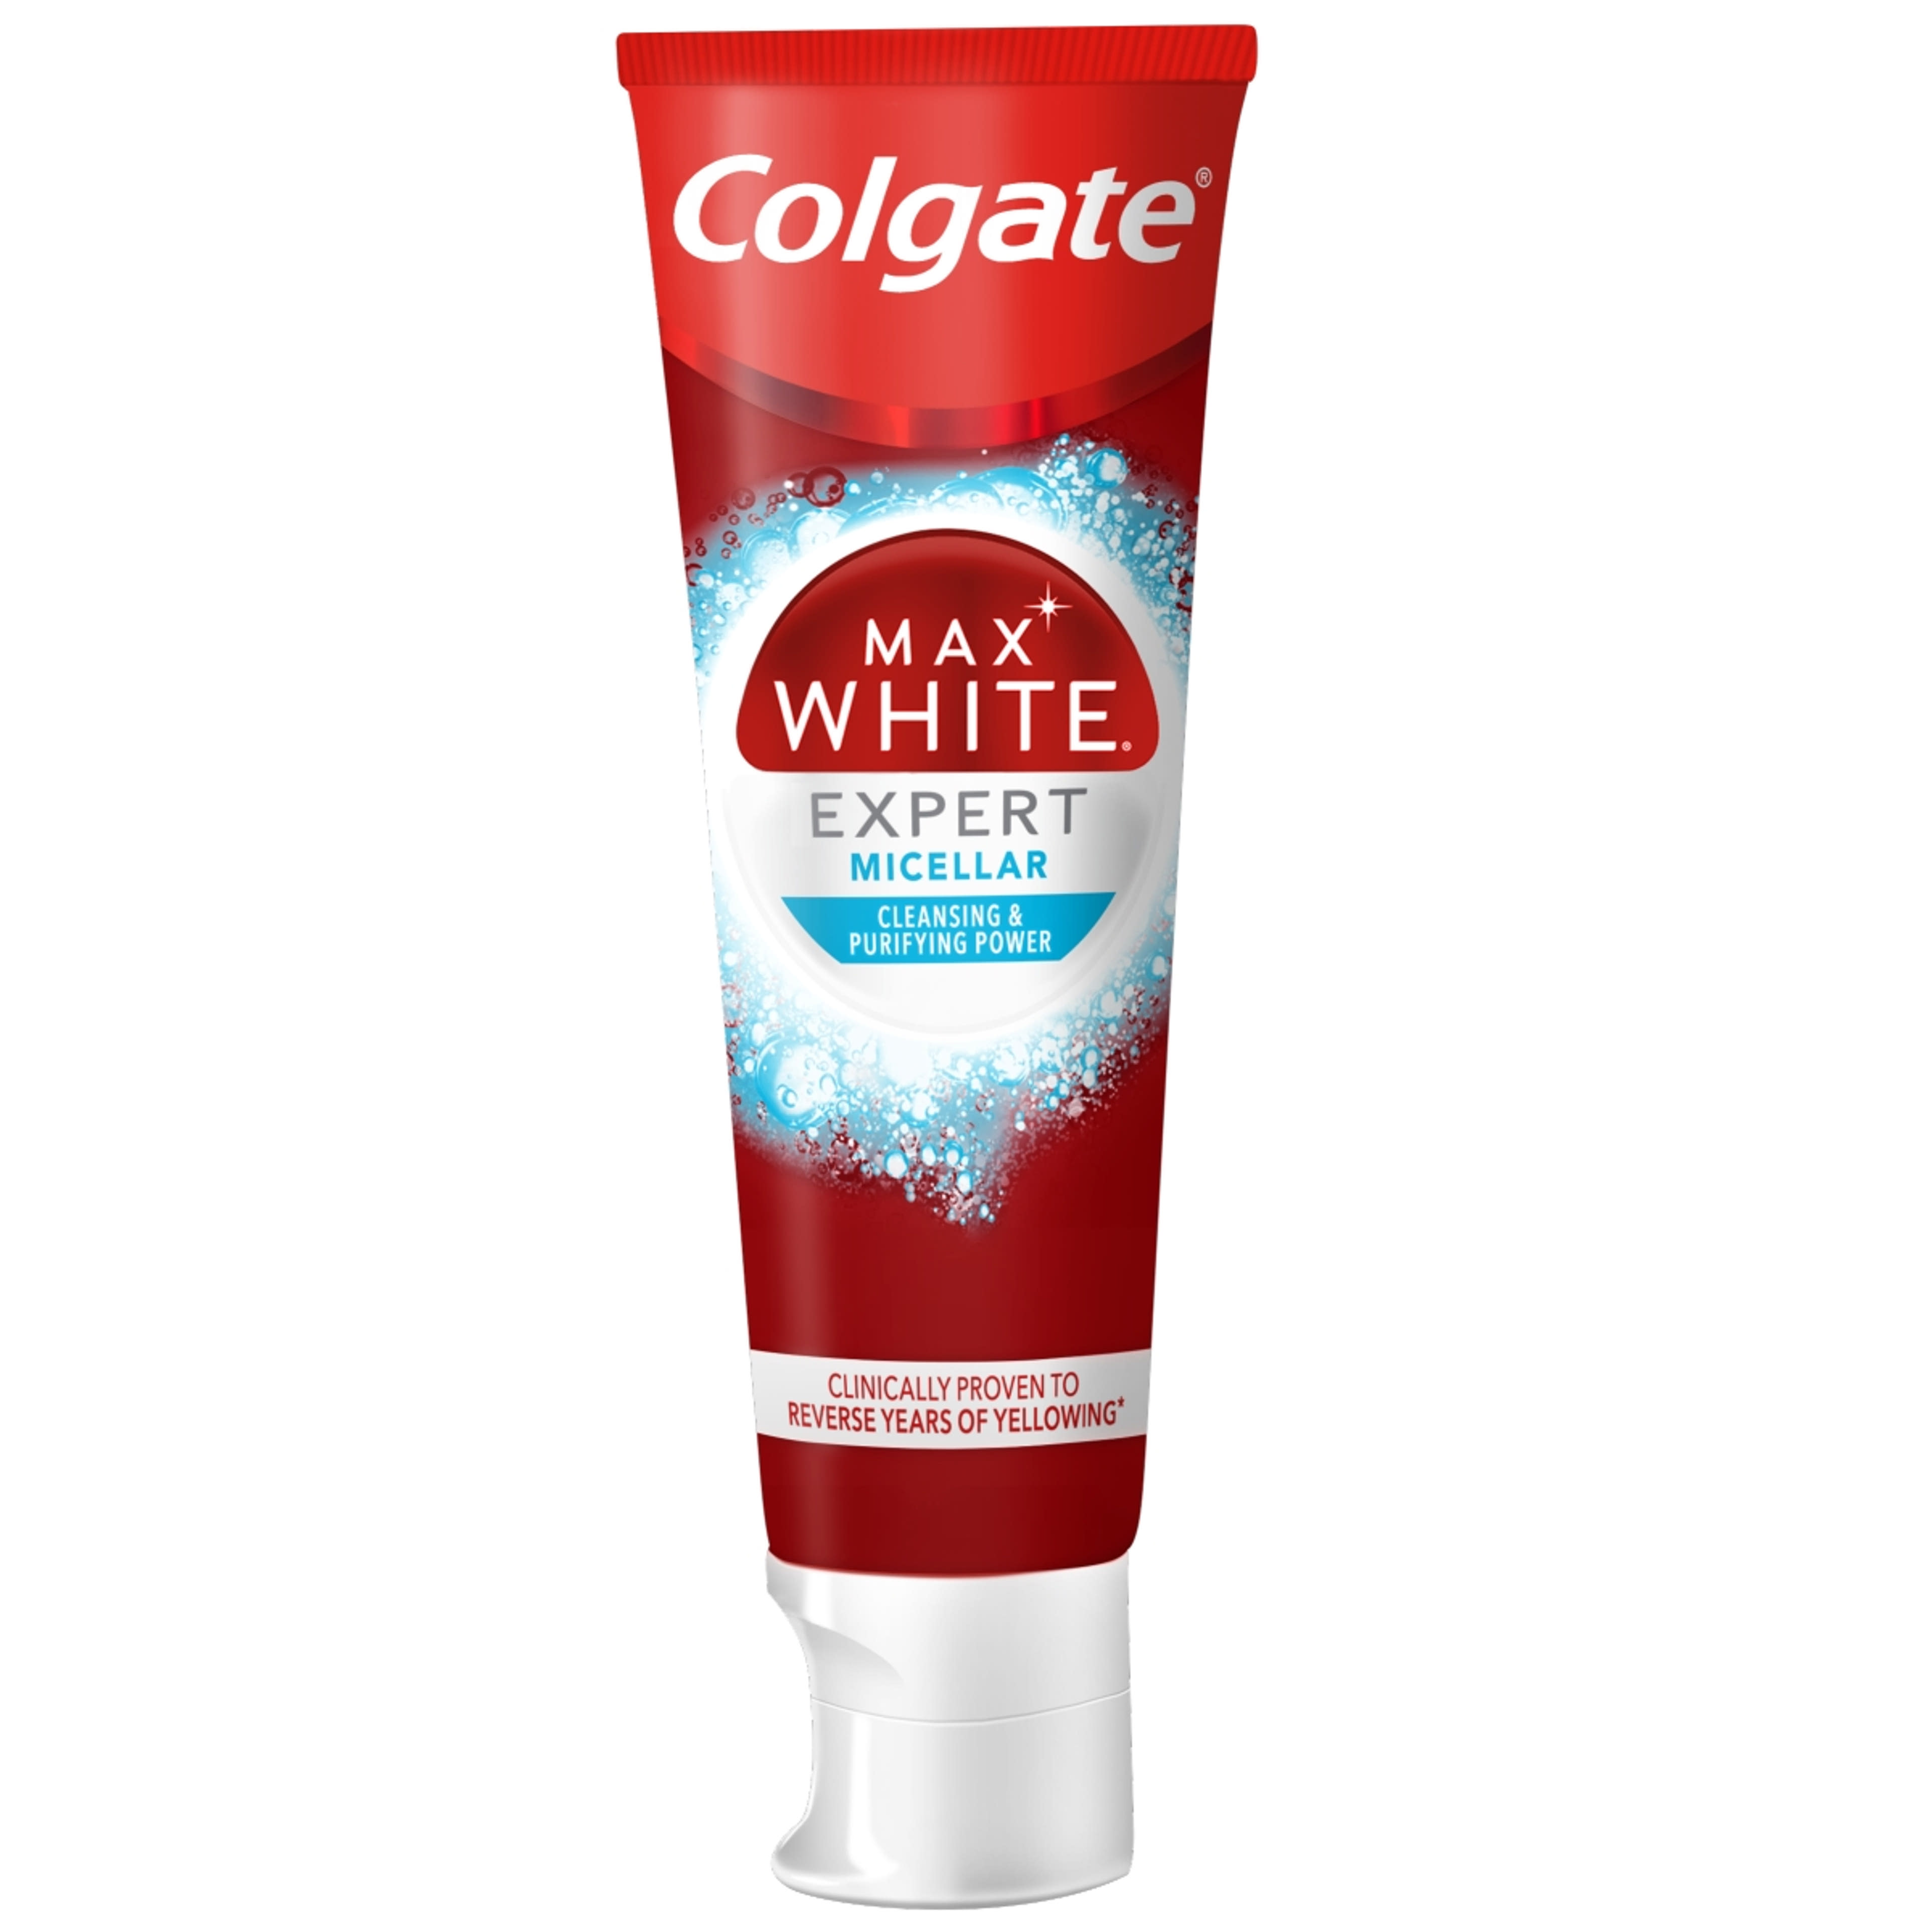 Colgate Max White Expert Micellar fogfehérítő fogkrém - 75 ml-2